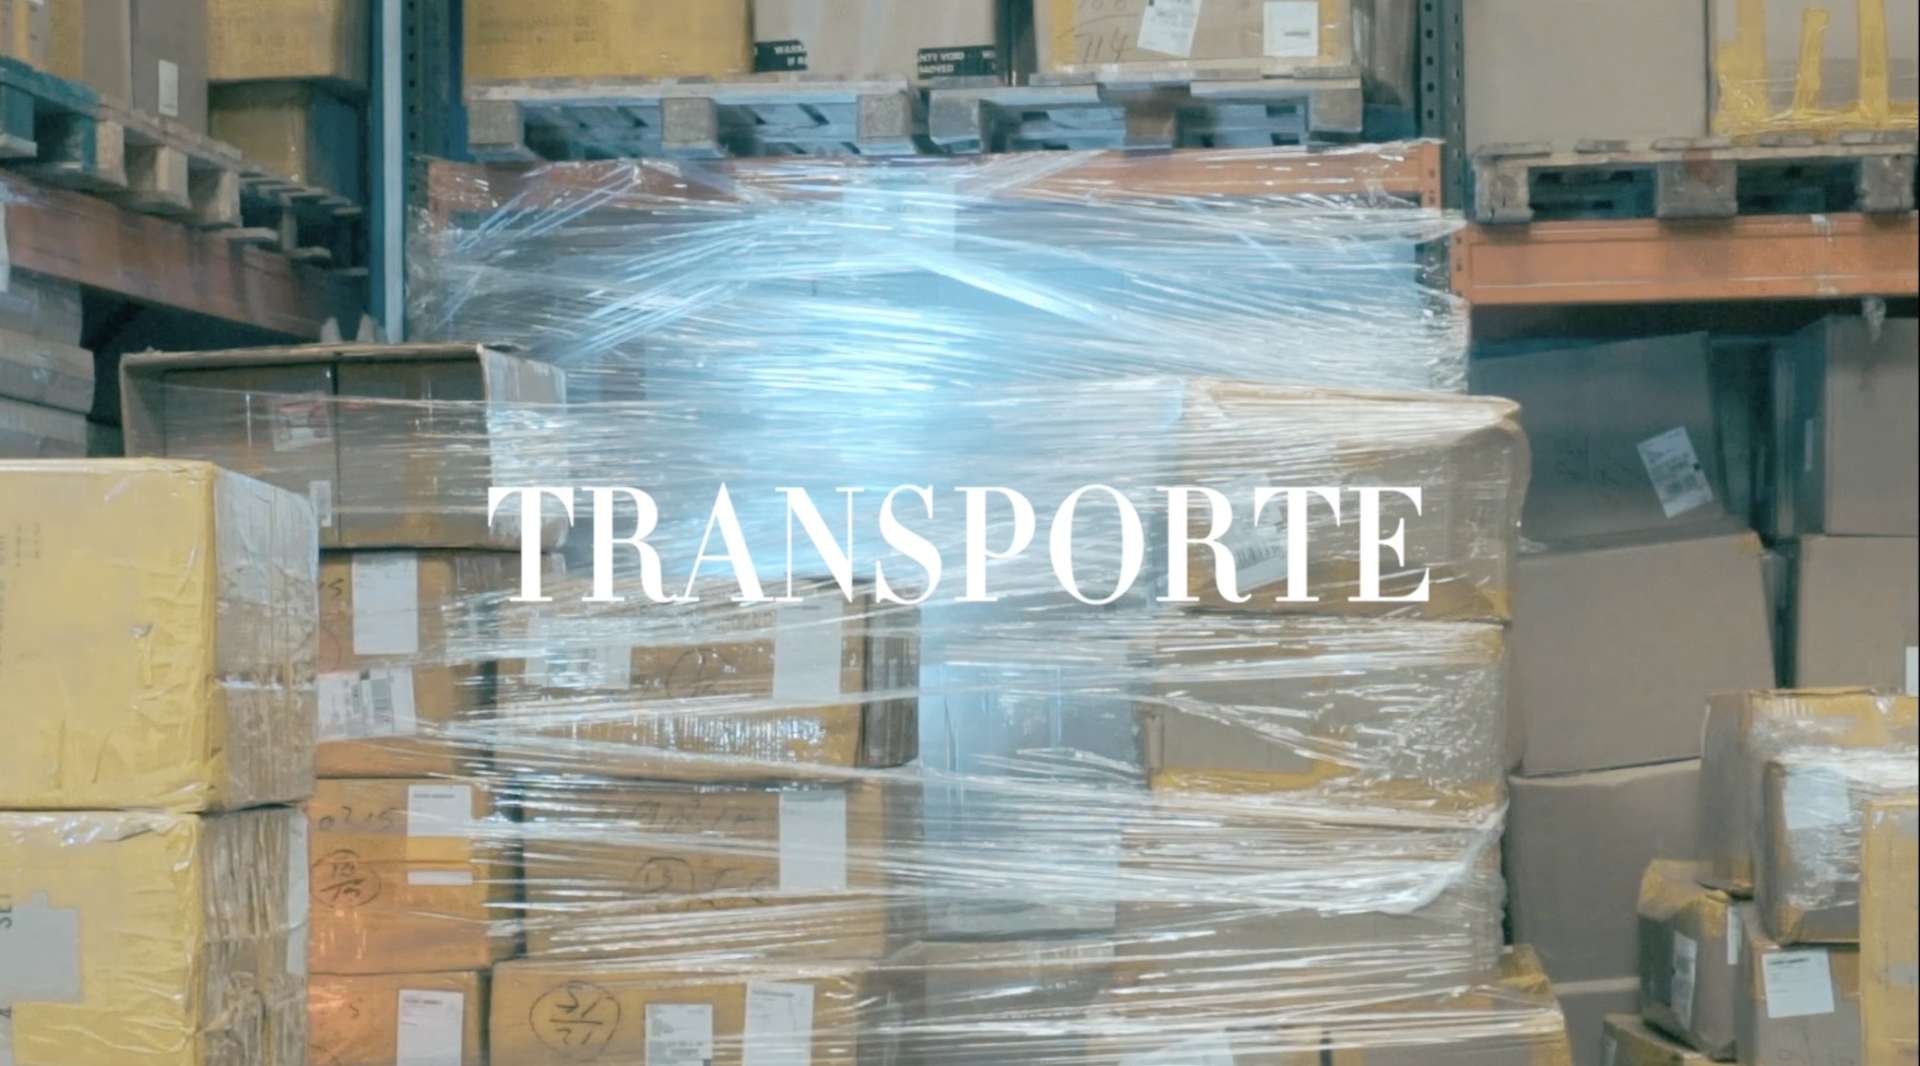 时尚短片 | 《Transporte》